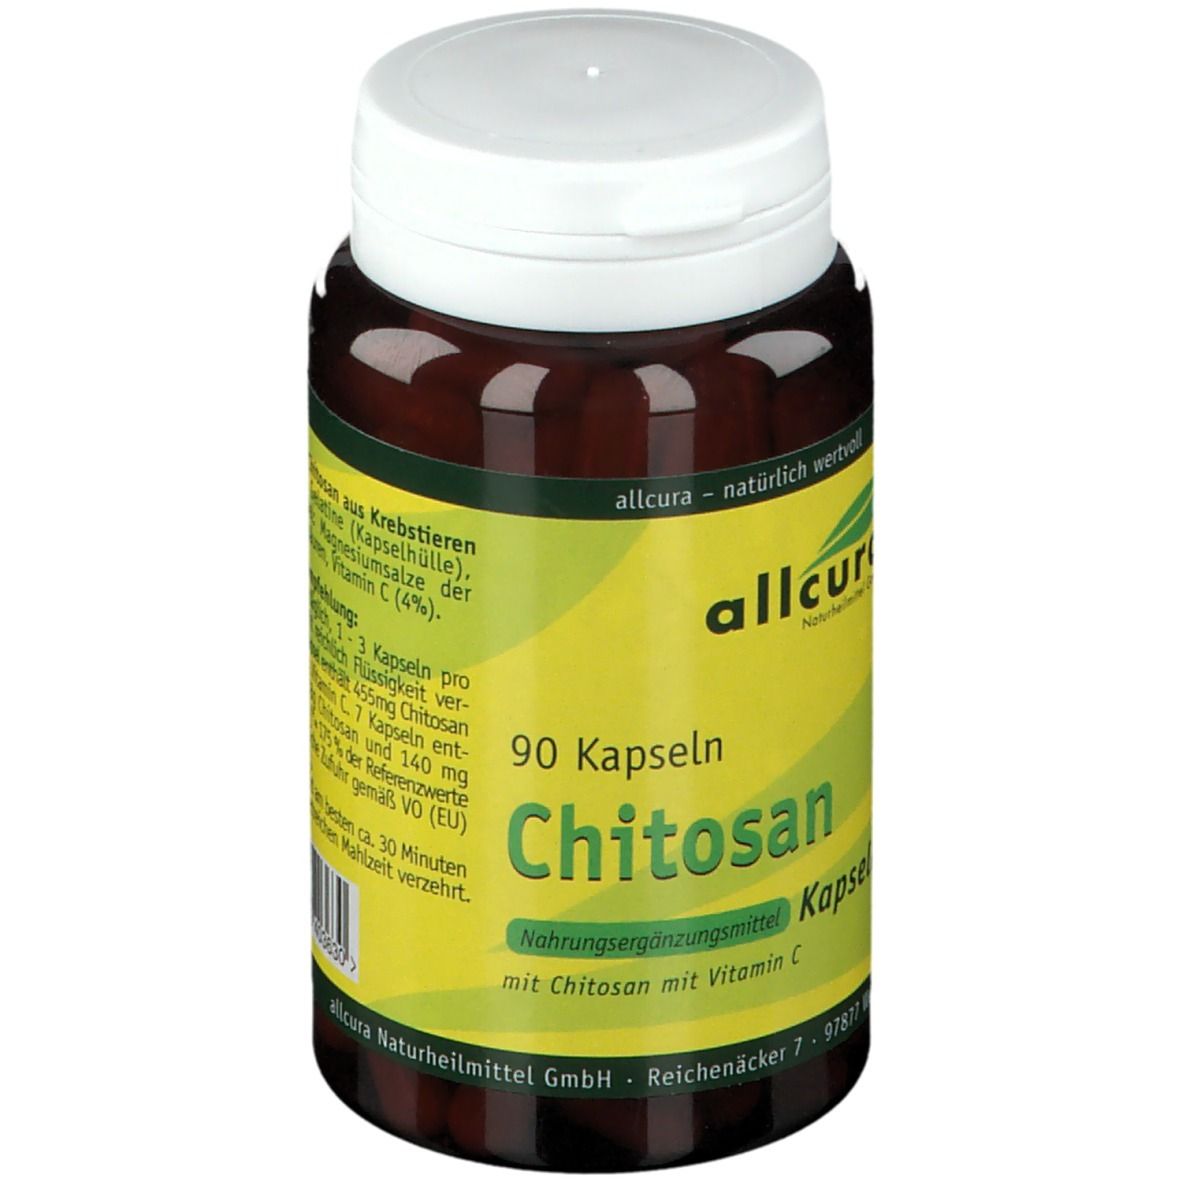 allcura Chitosan capsules